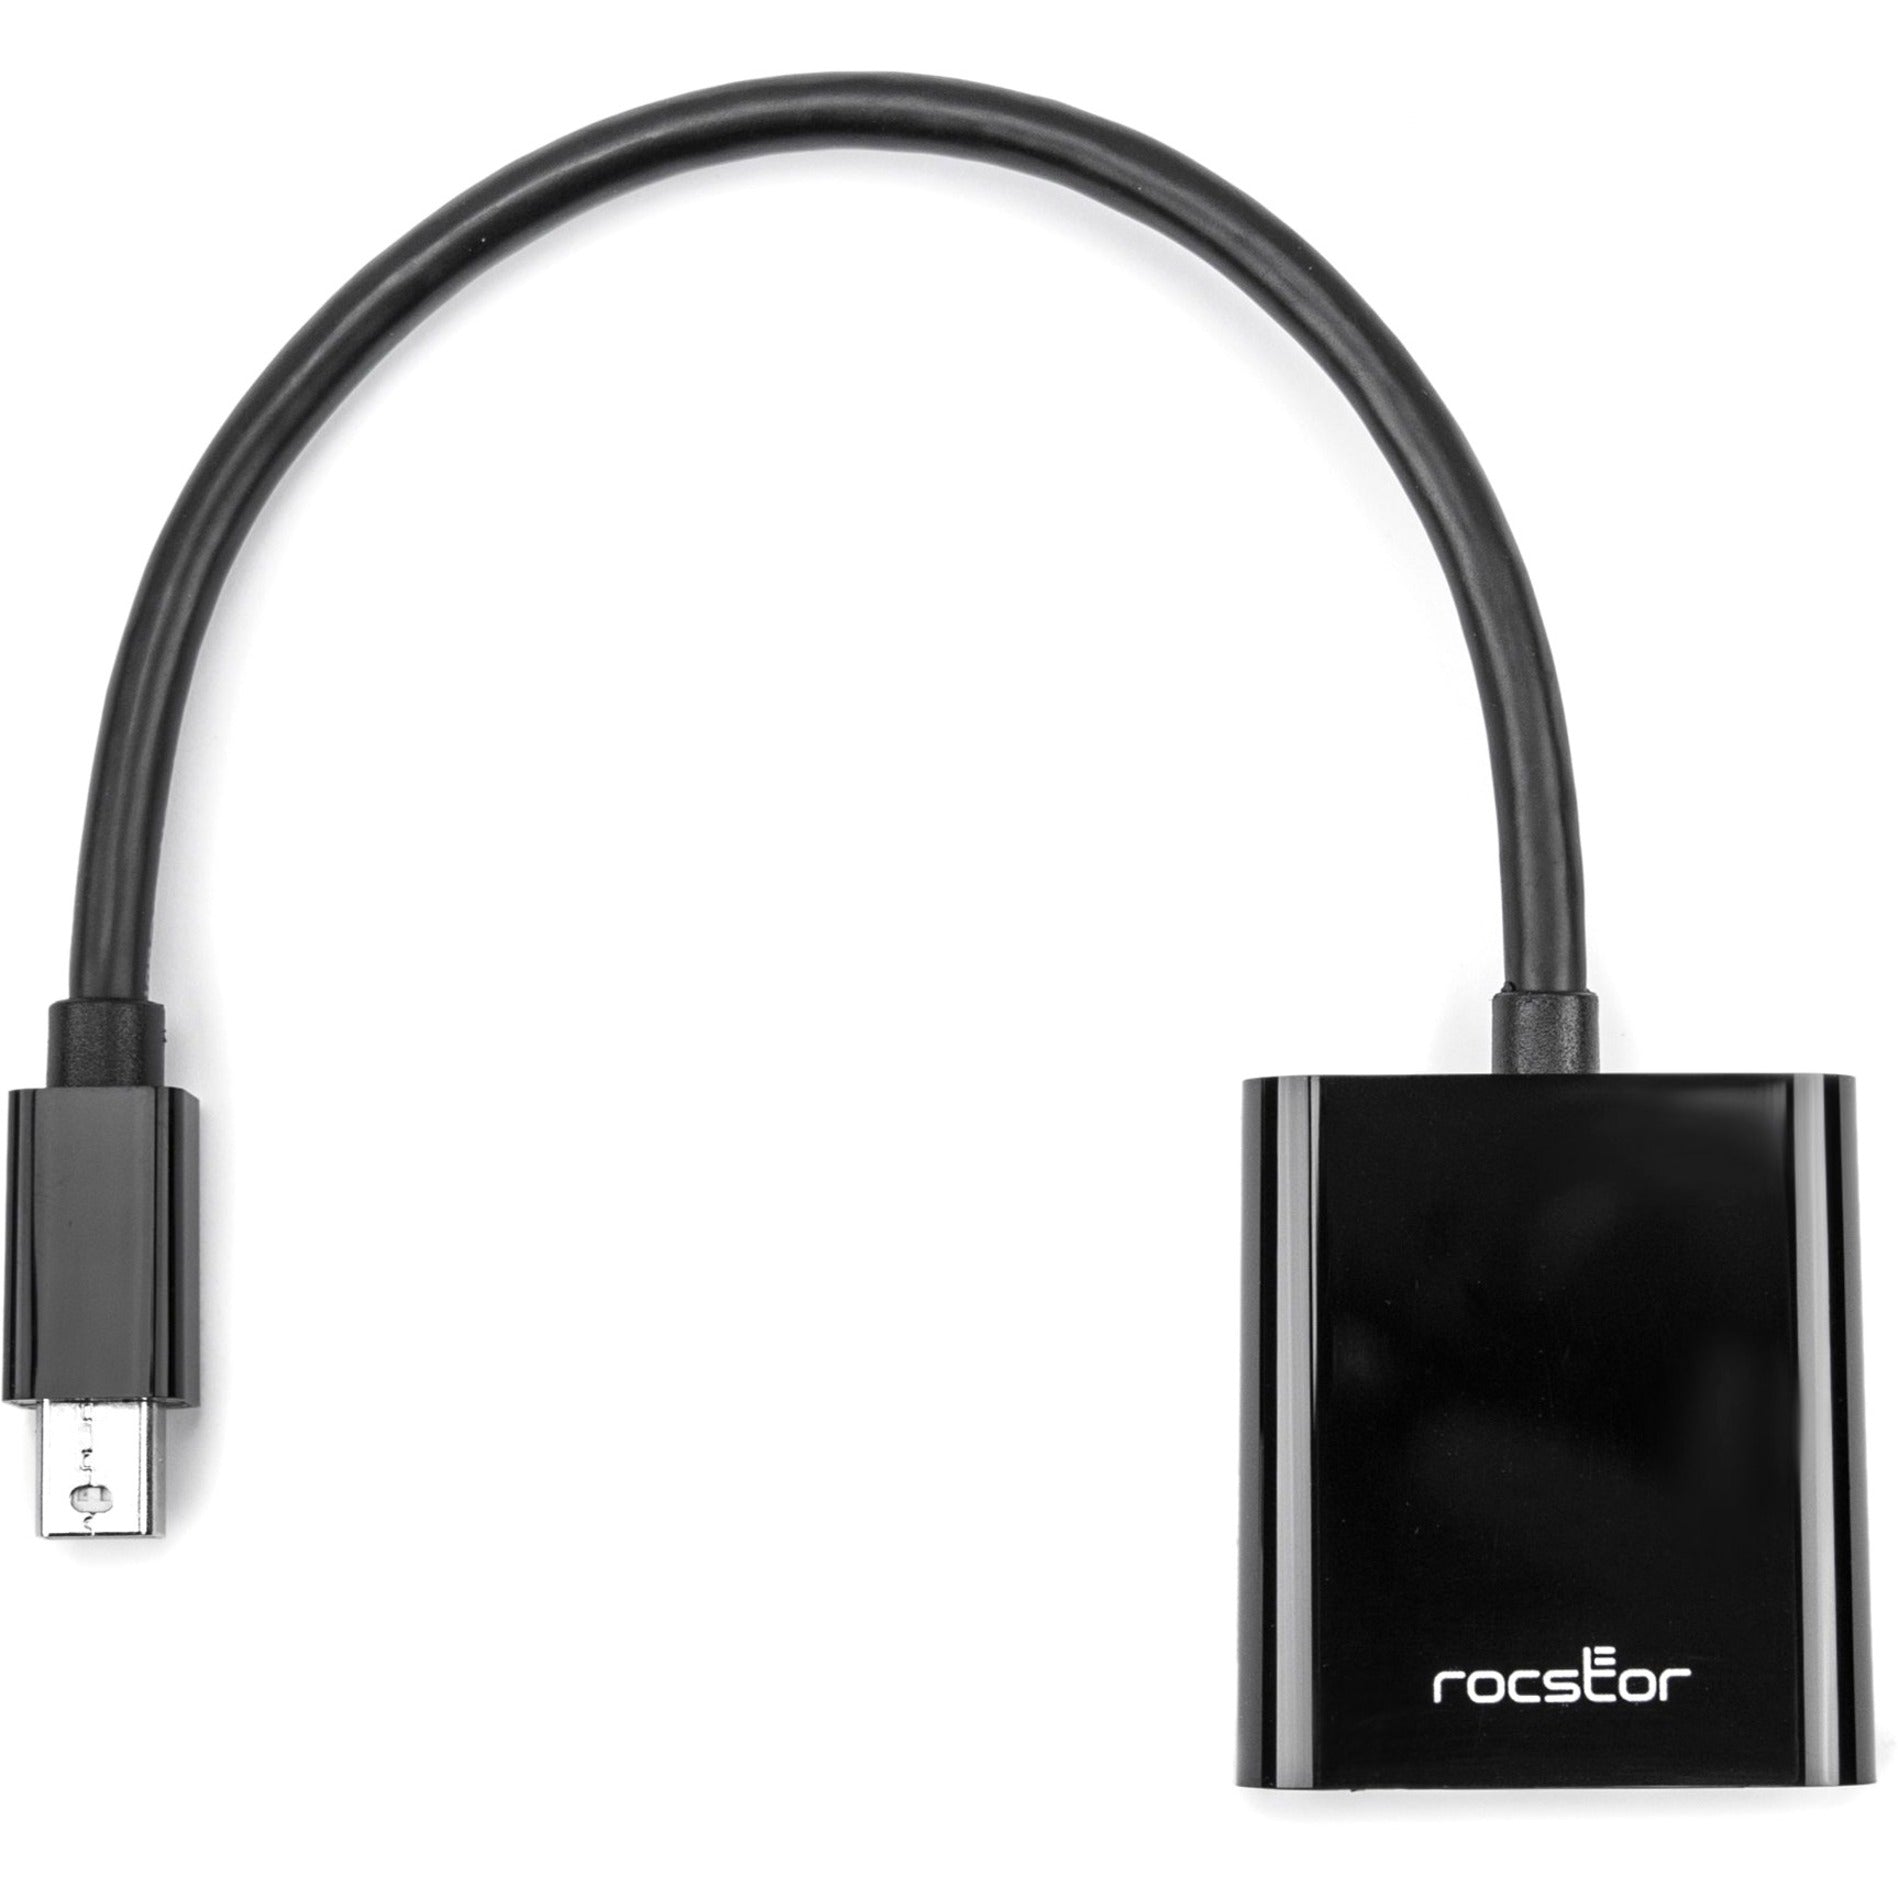 Rocstor Y10A199-B1 Premium Mini DisplayPort to VGA Video Adapter, 6" Cable, Black